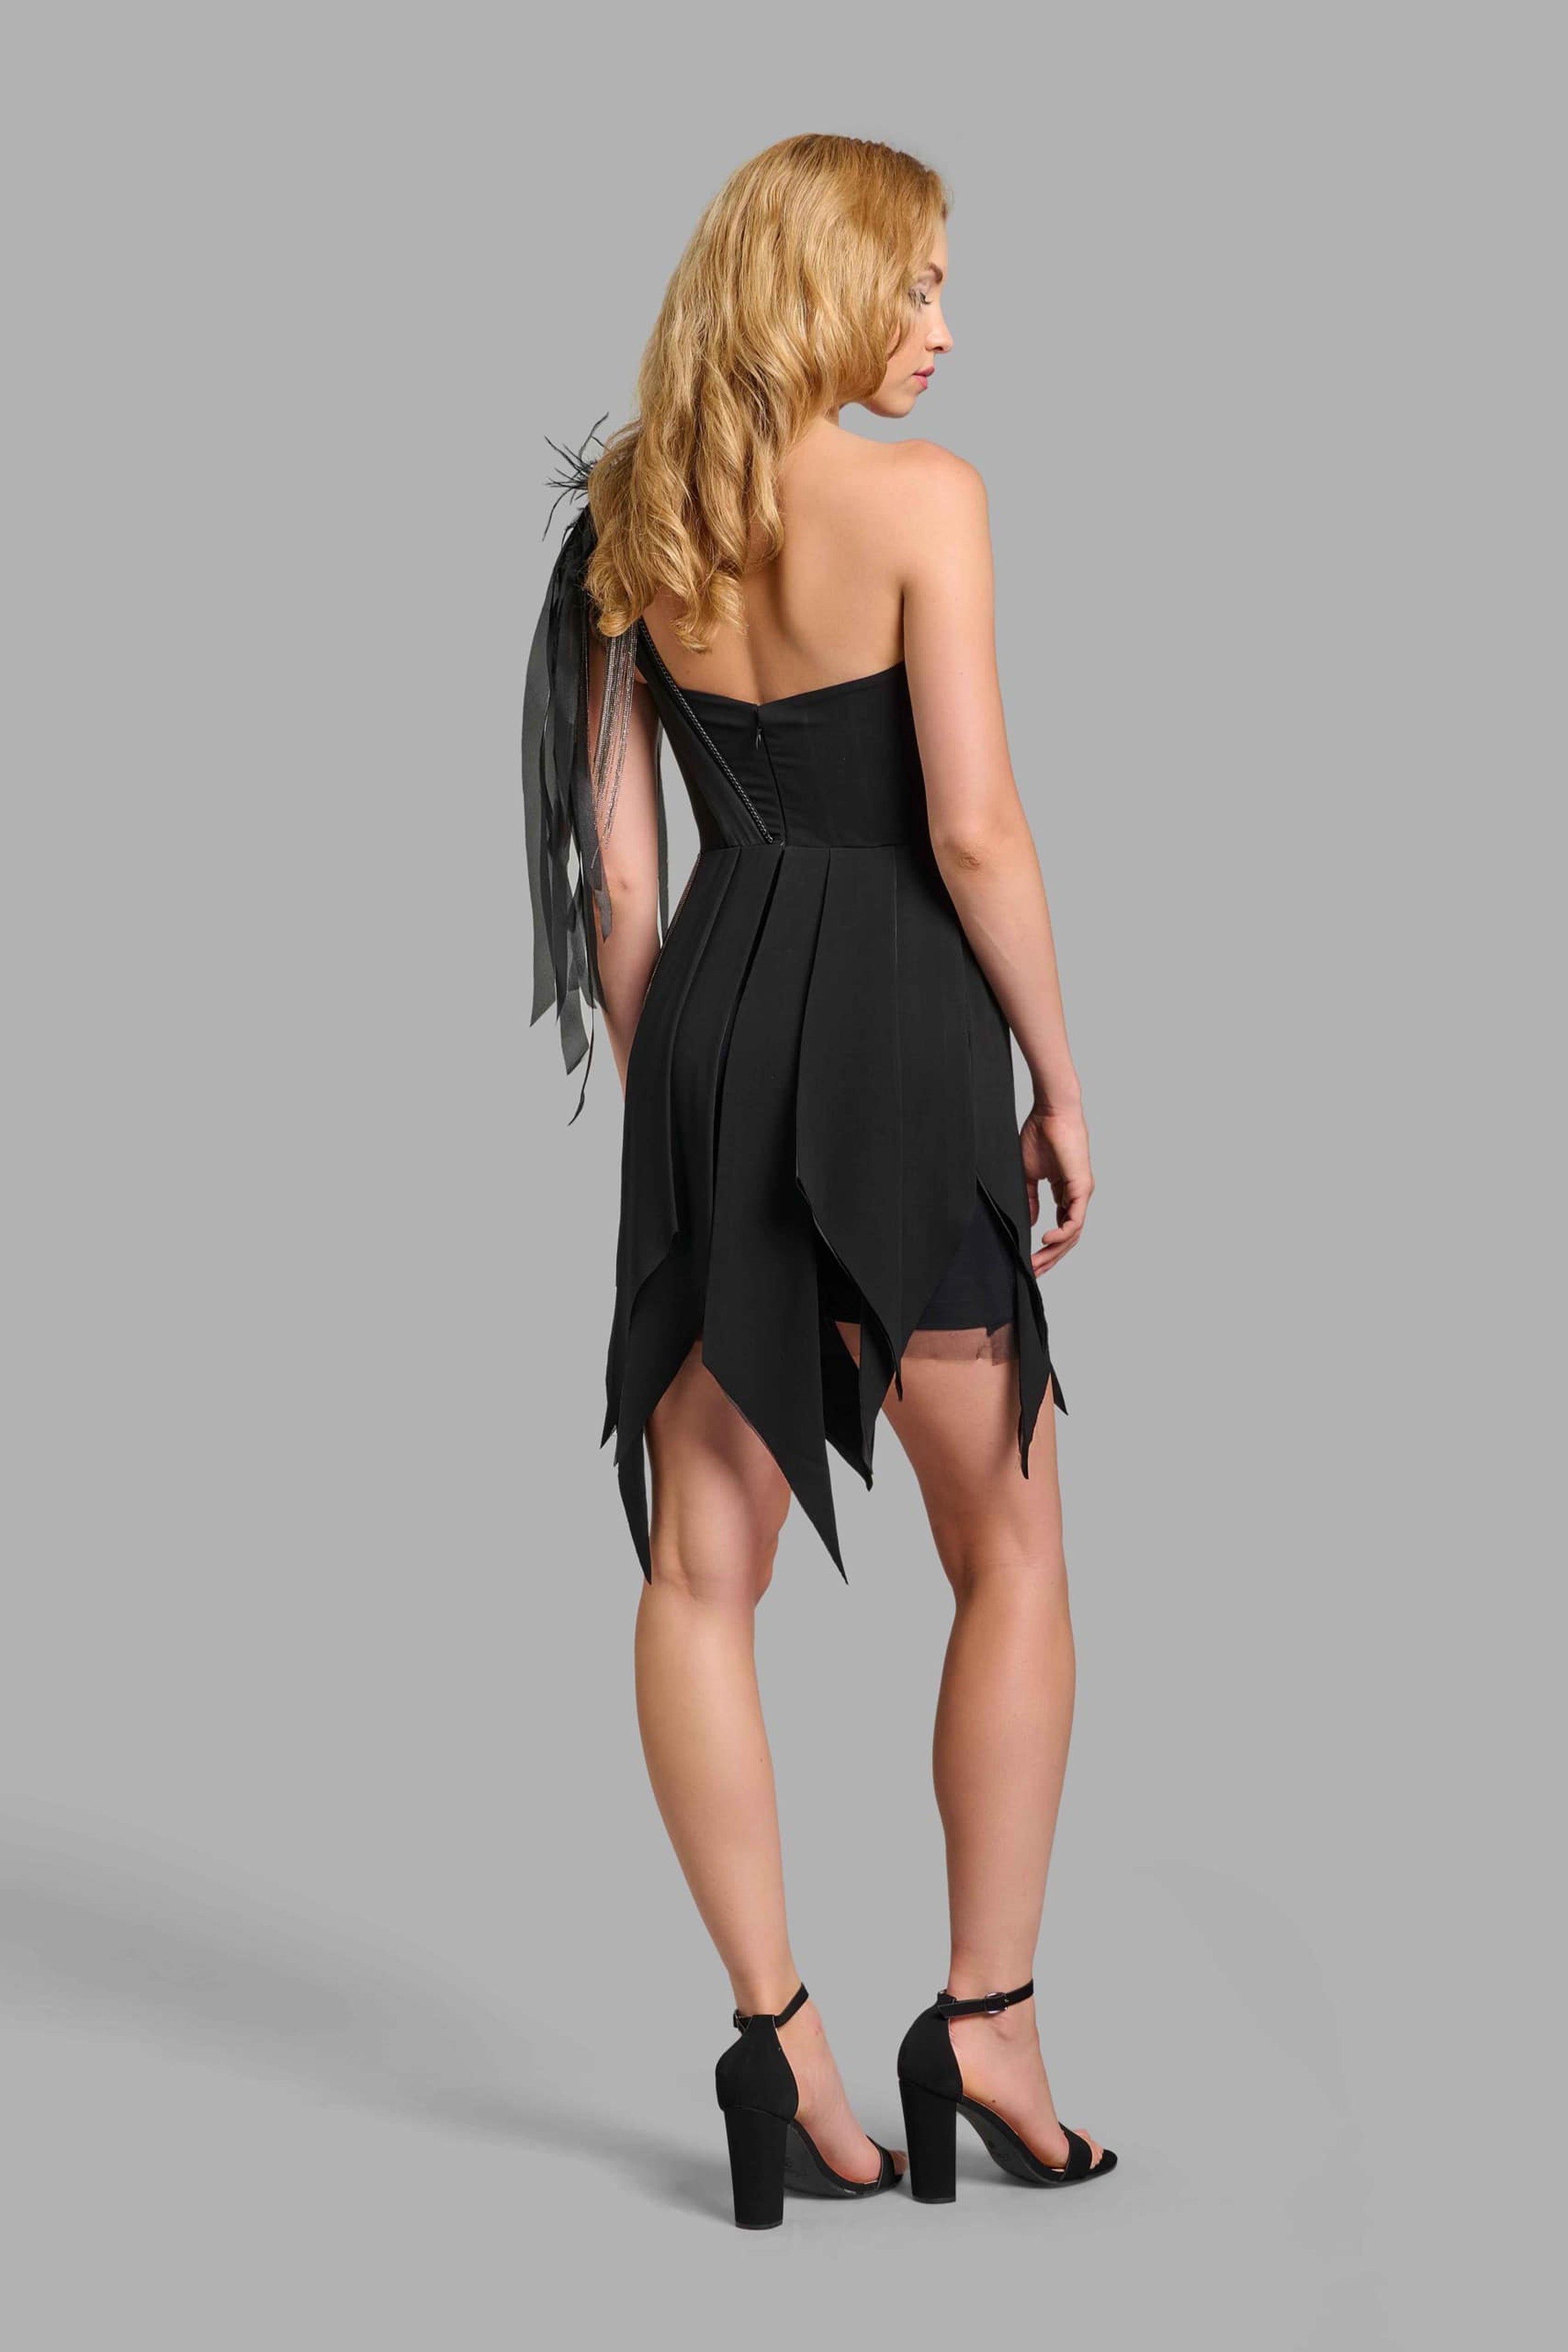 Black Jagged Cocktail Dress